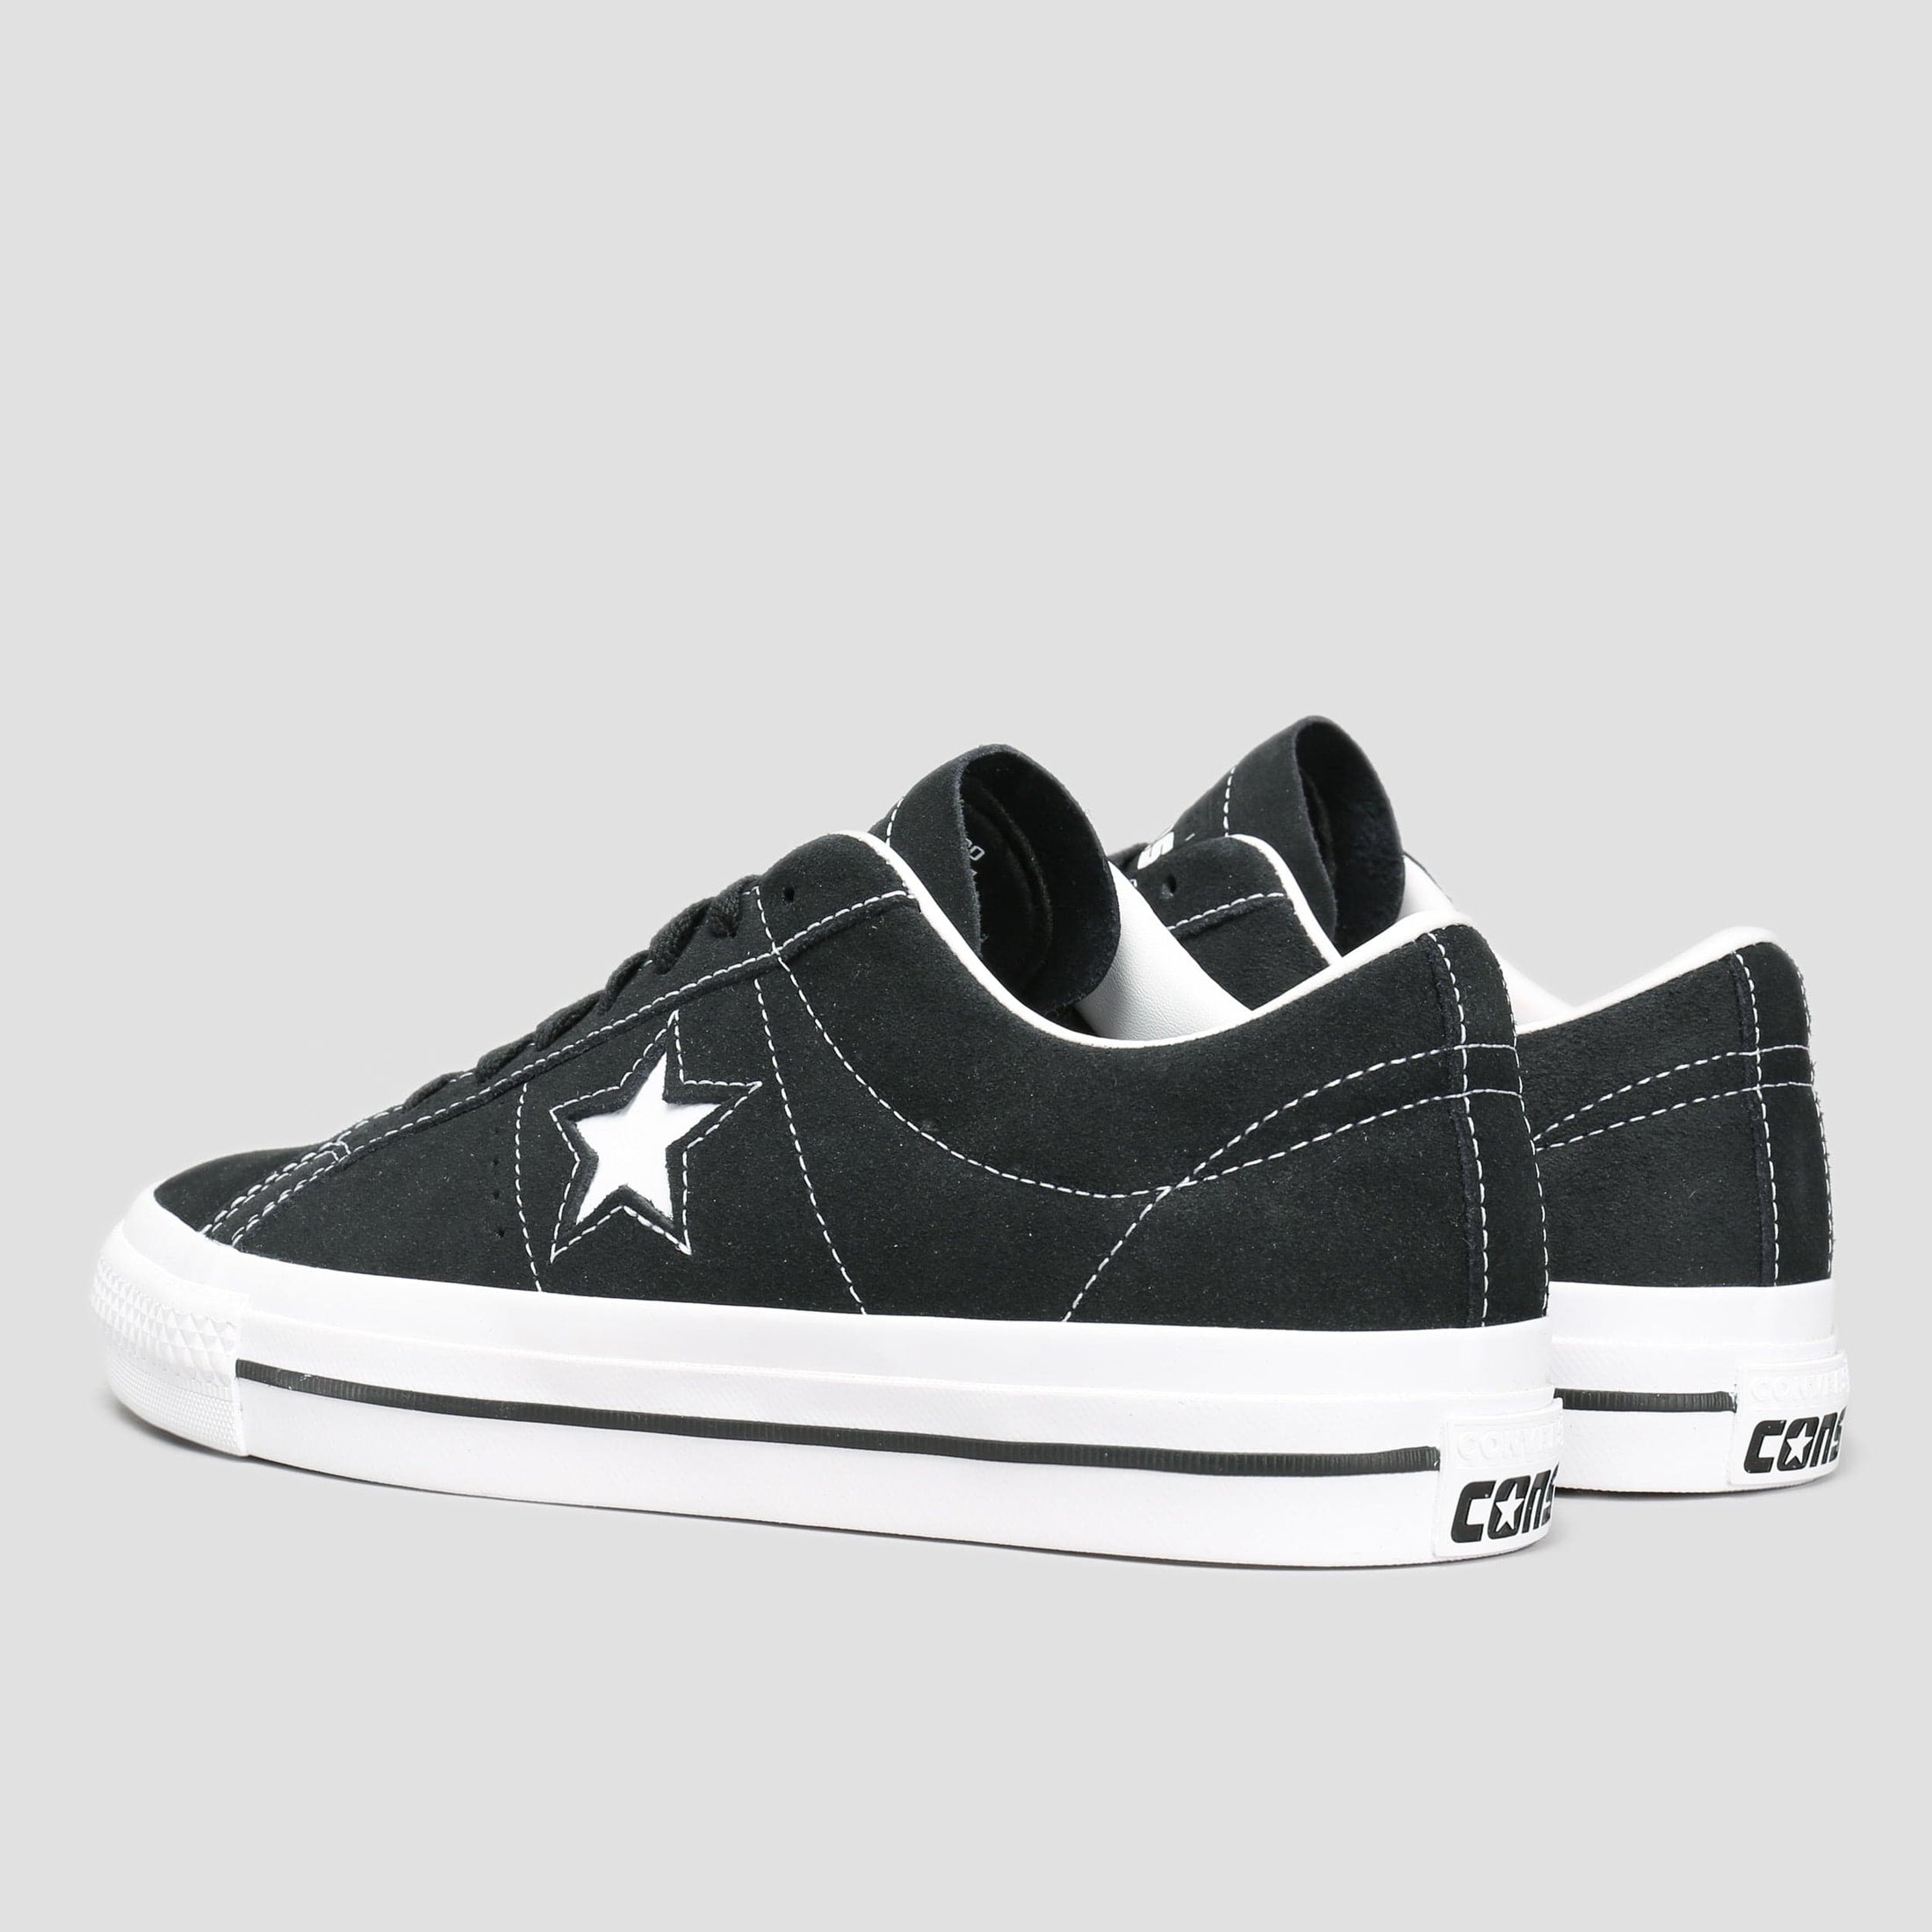 Converse One Star Pro OX Shoes Black / Black / White